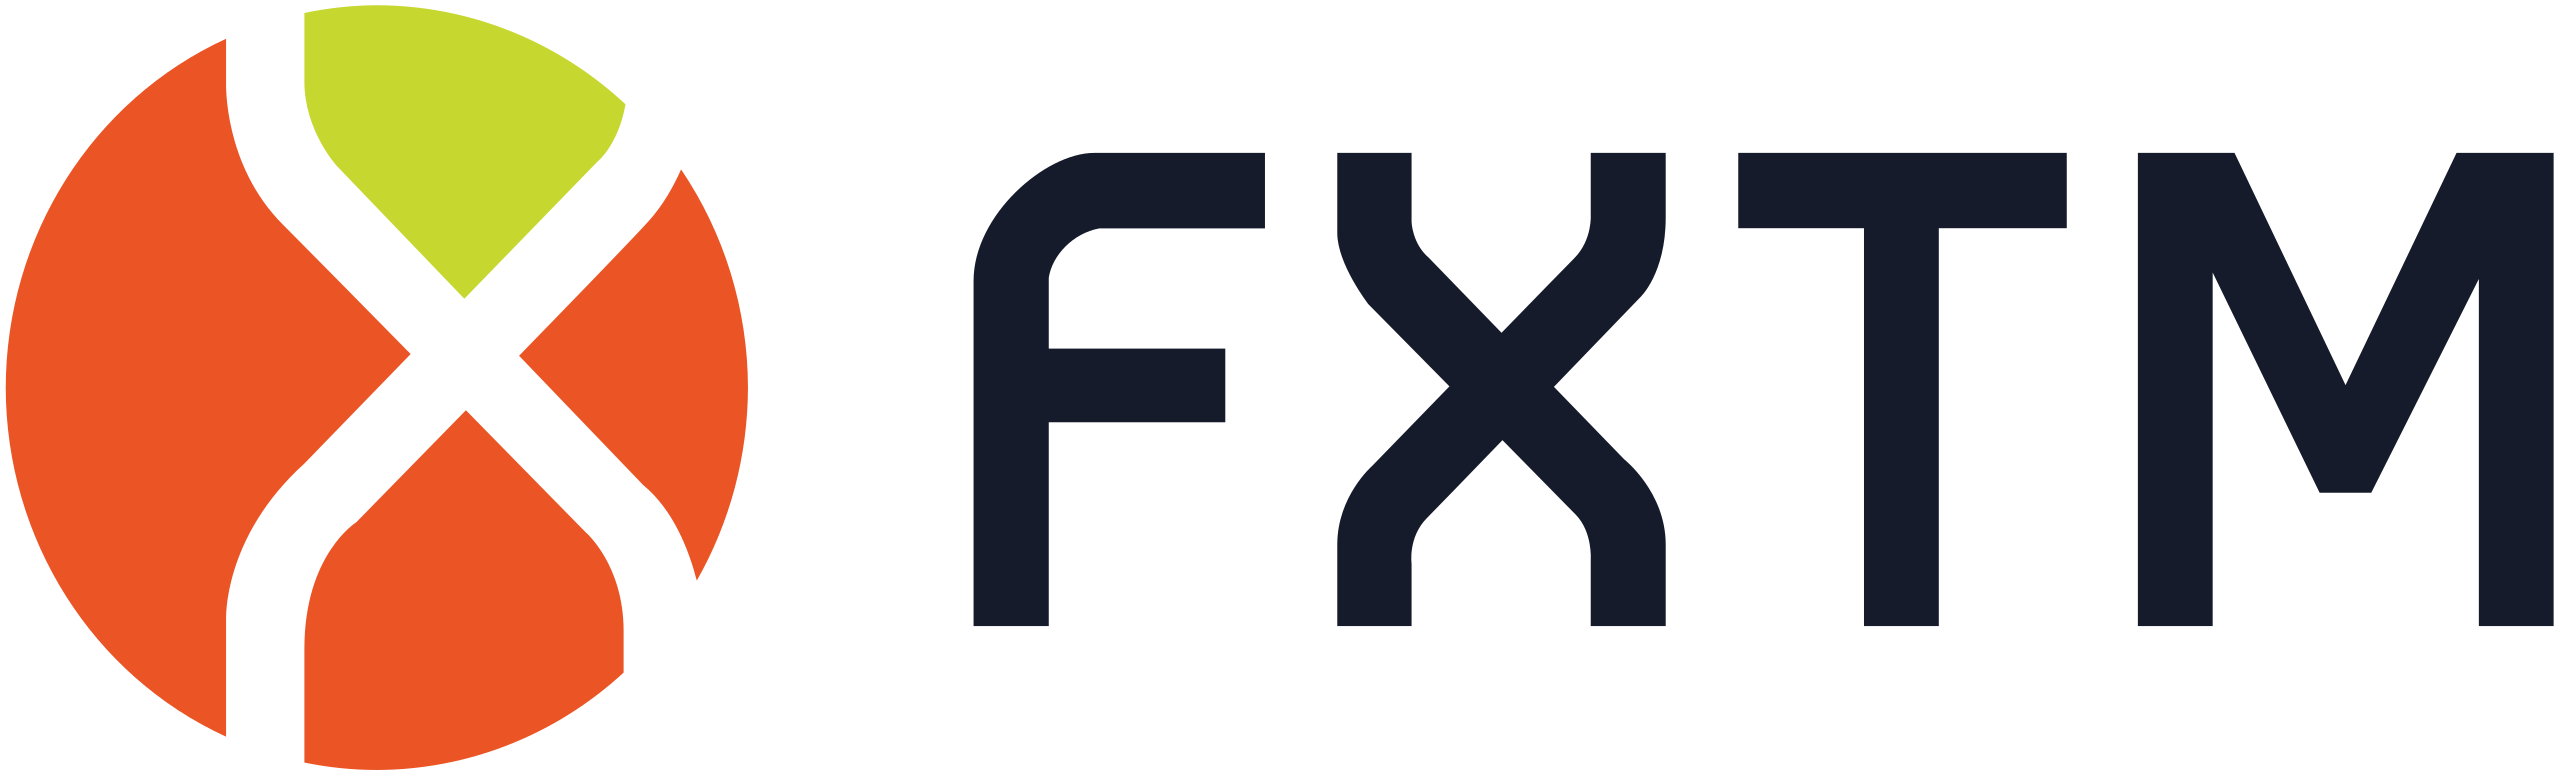 File:FXTM logo.svg - Wikimedia Commons